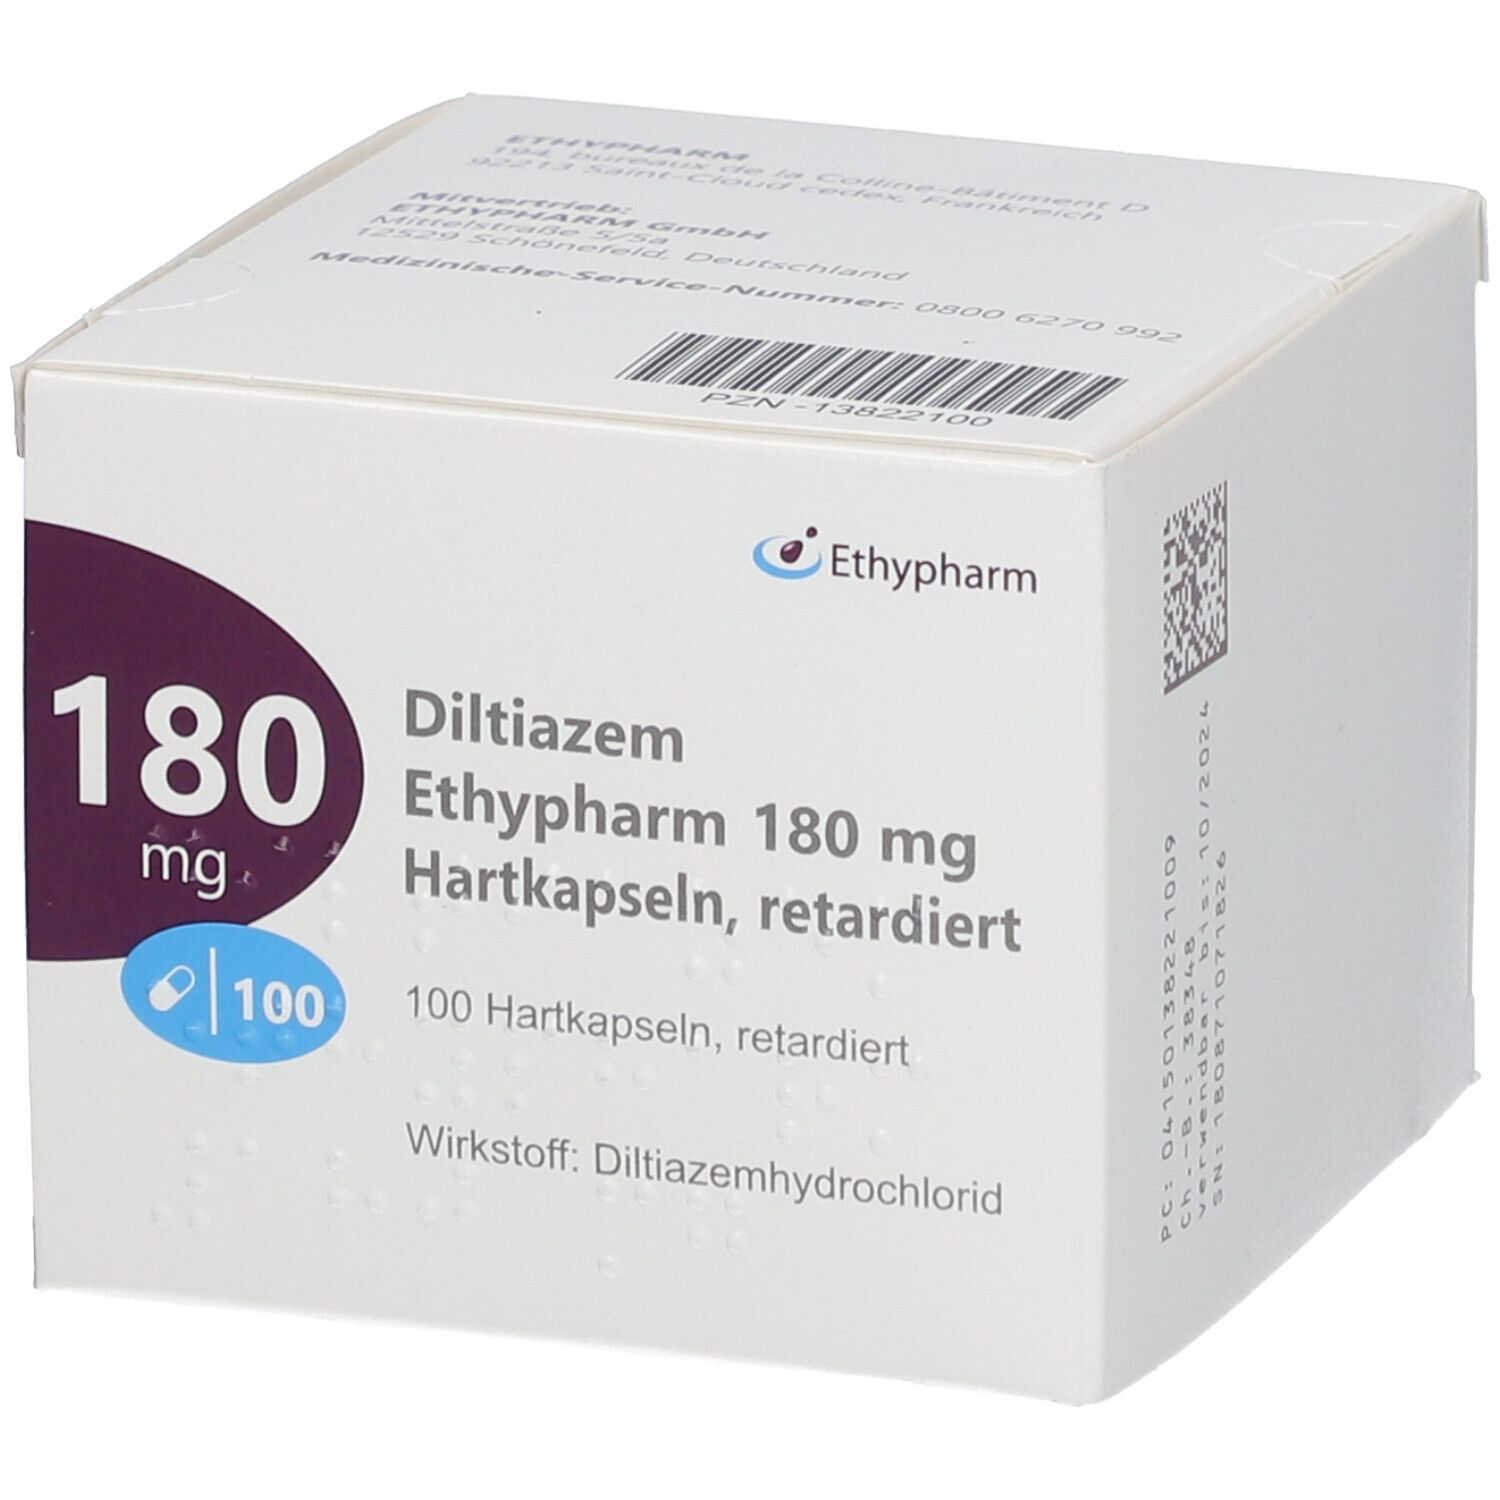 Diltiazem Ethypharm 180 mg